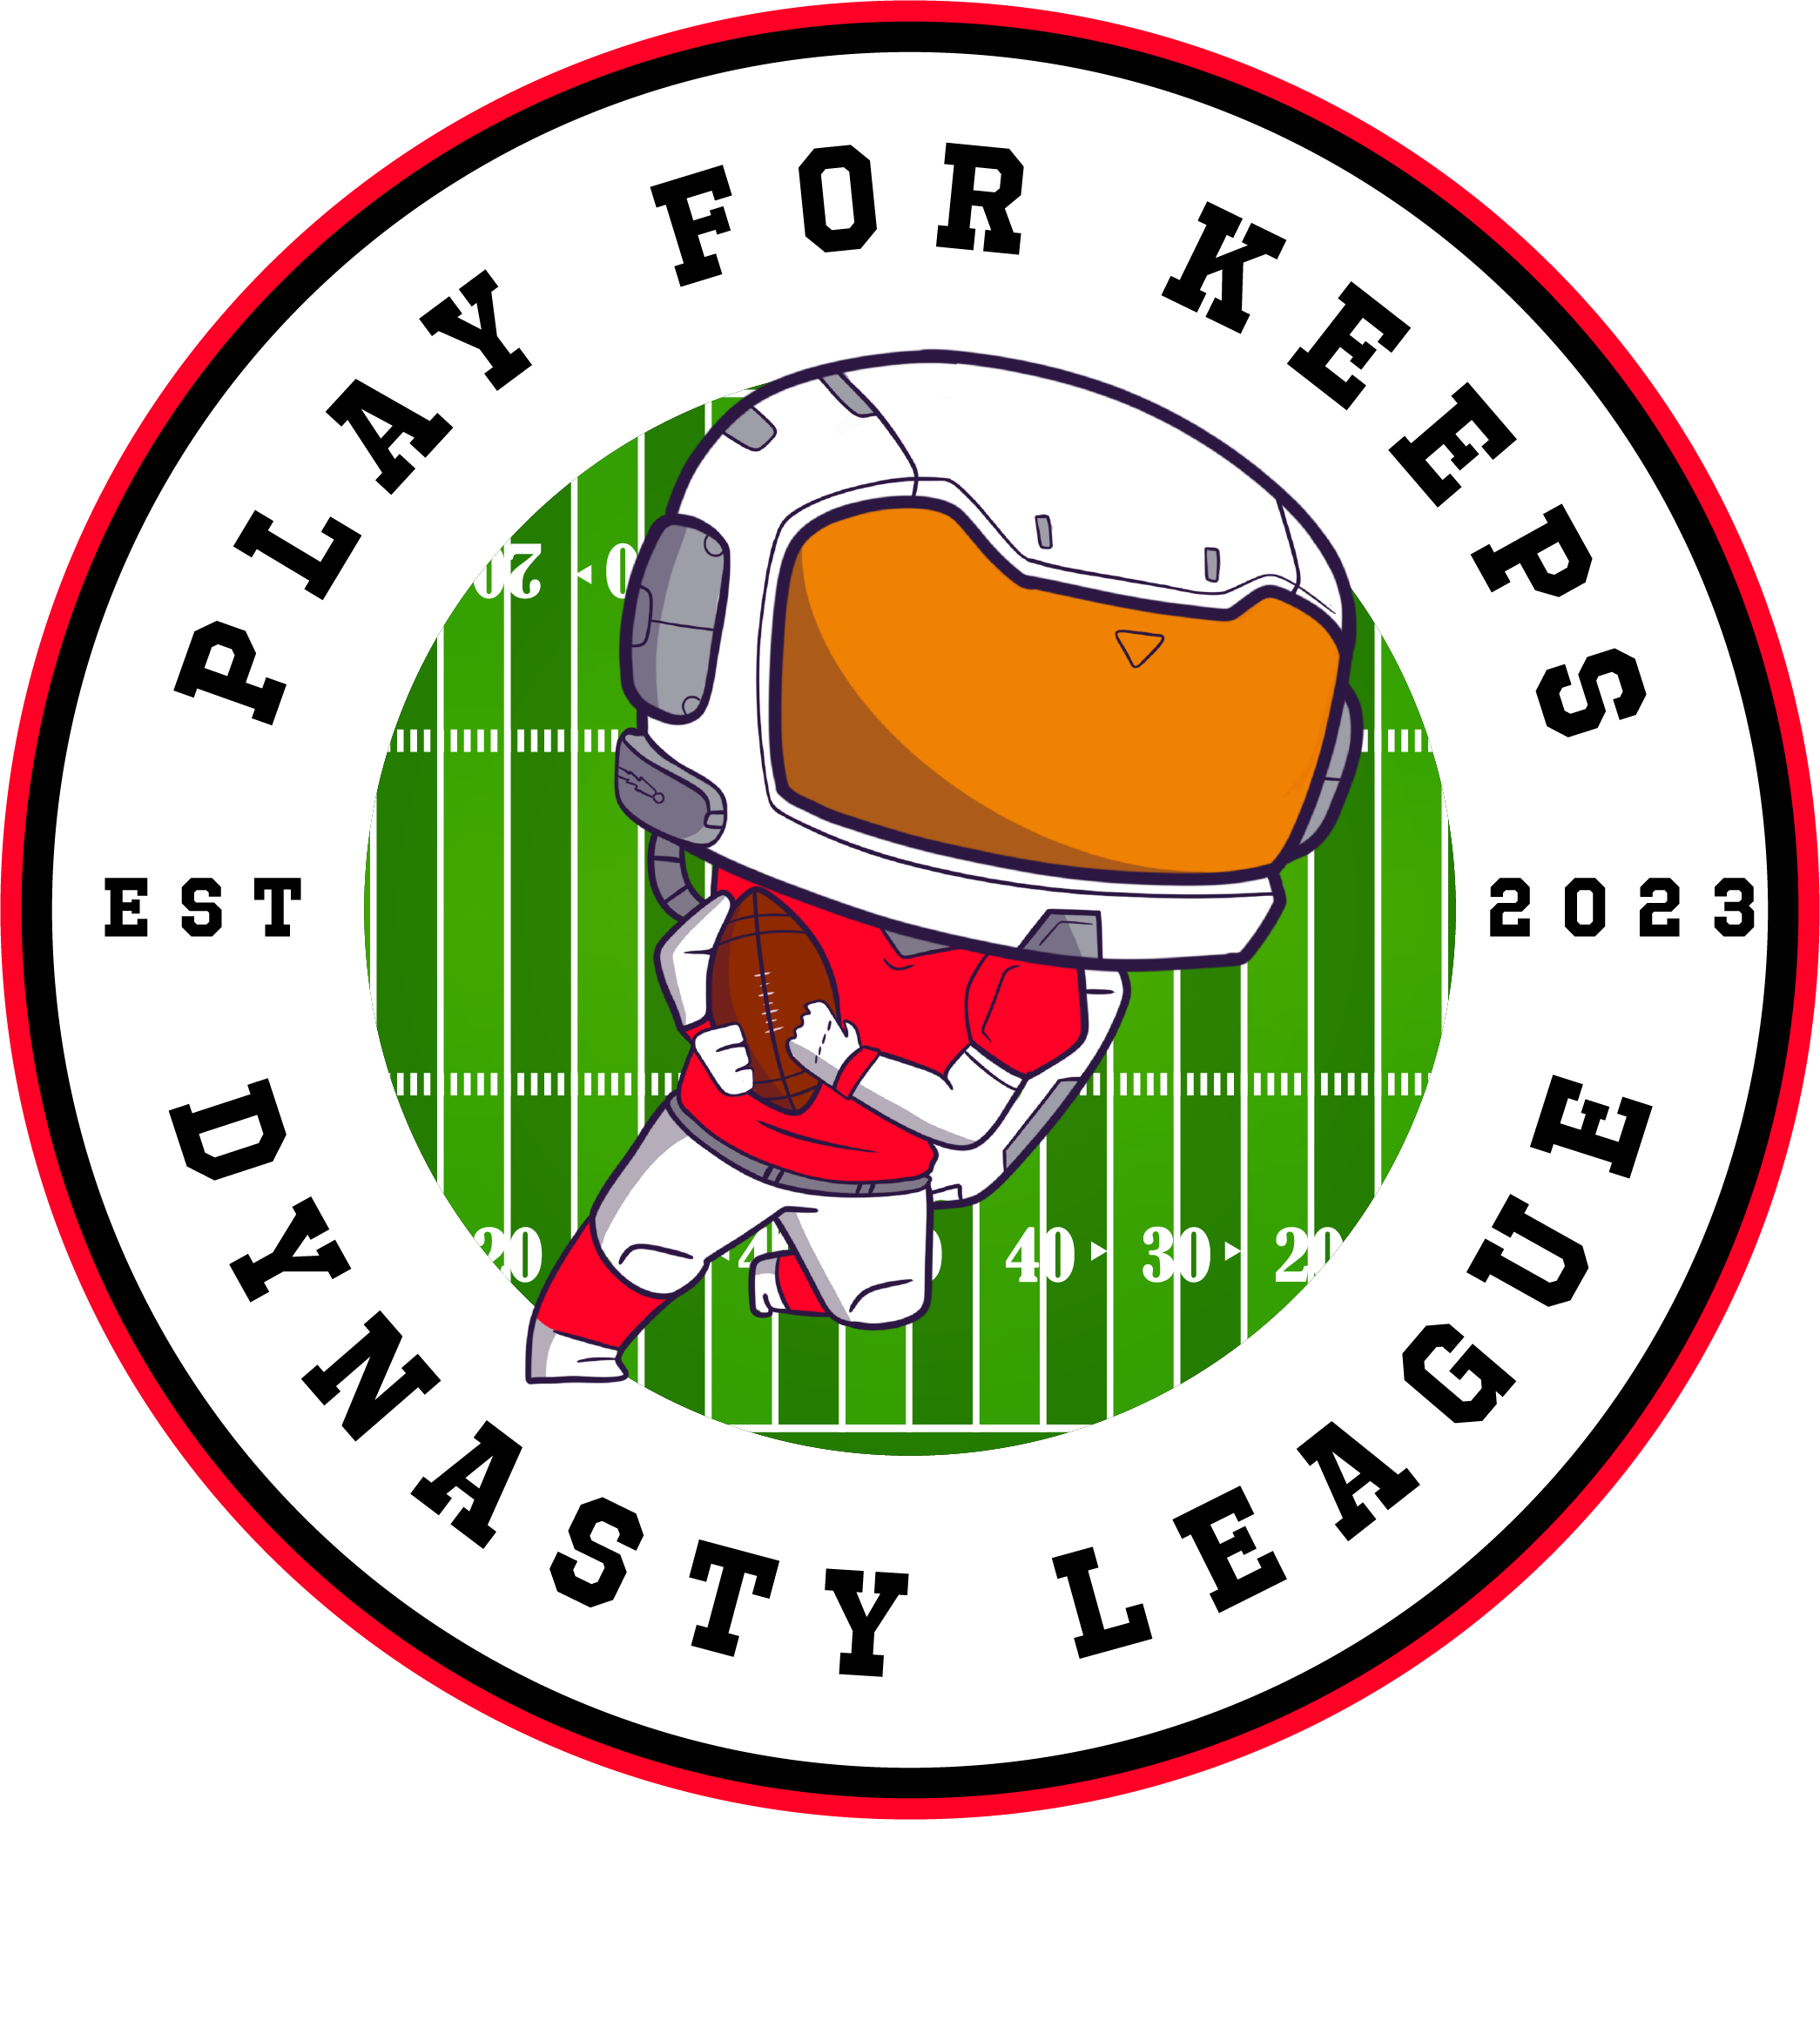 league logo